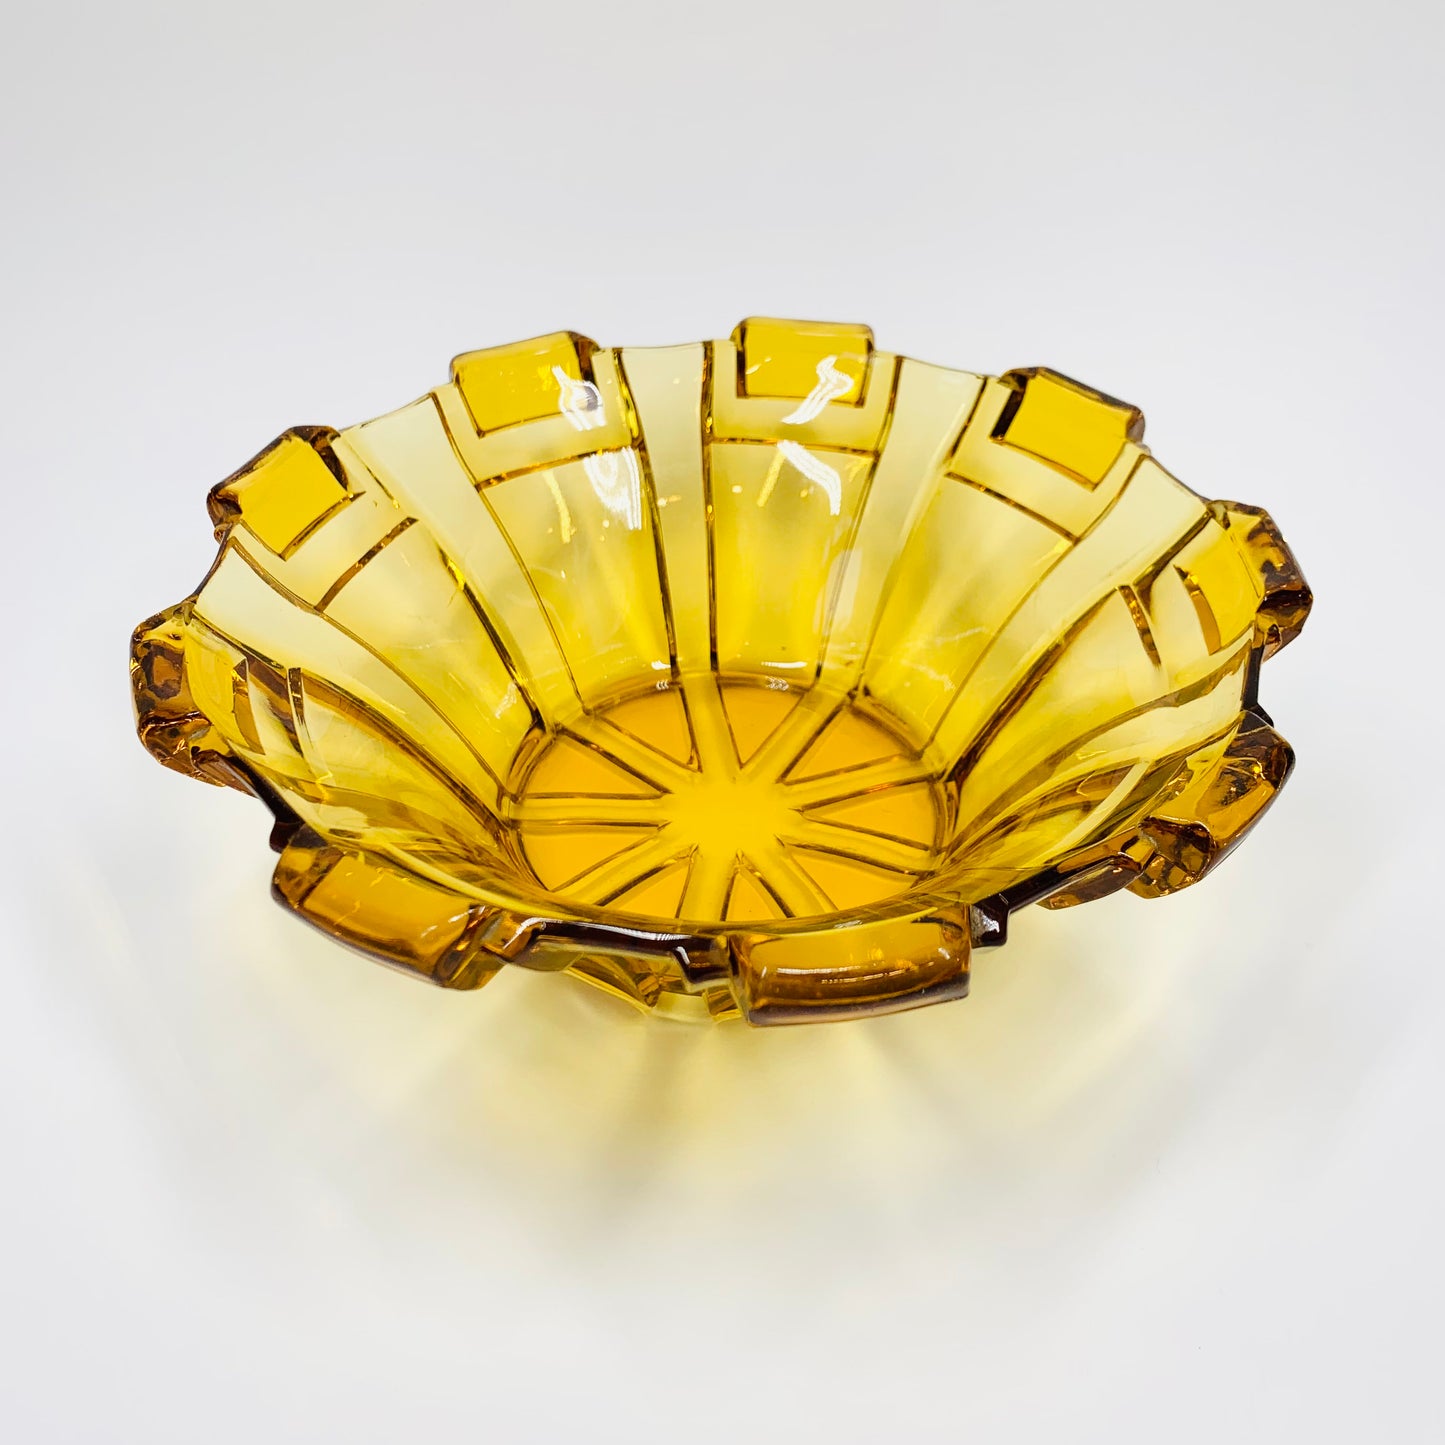 Art Deco amber glass salad/fruit bowl